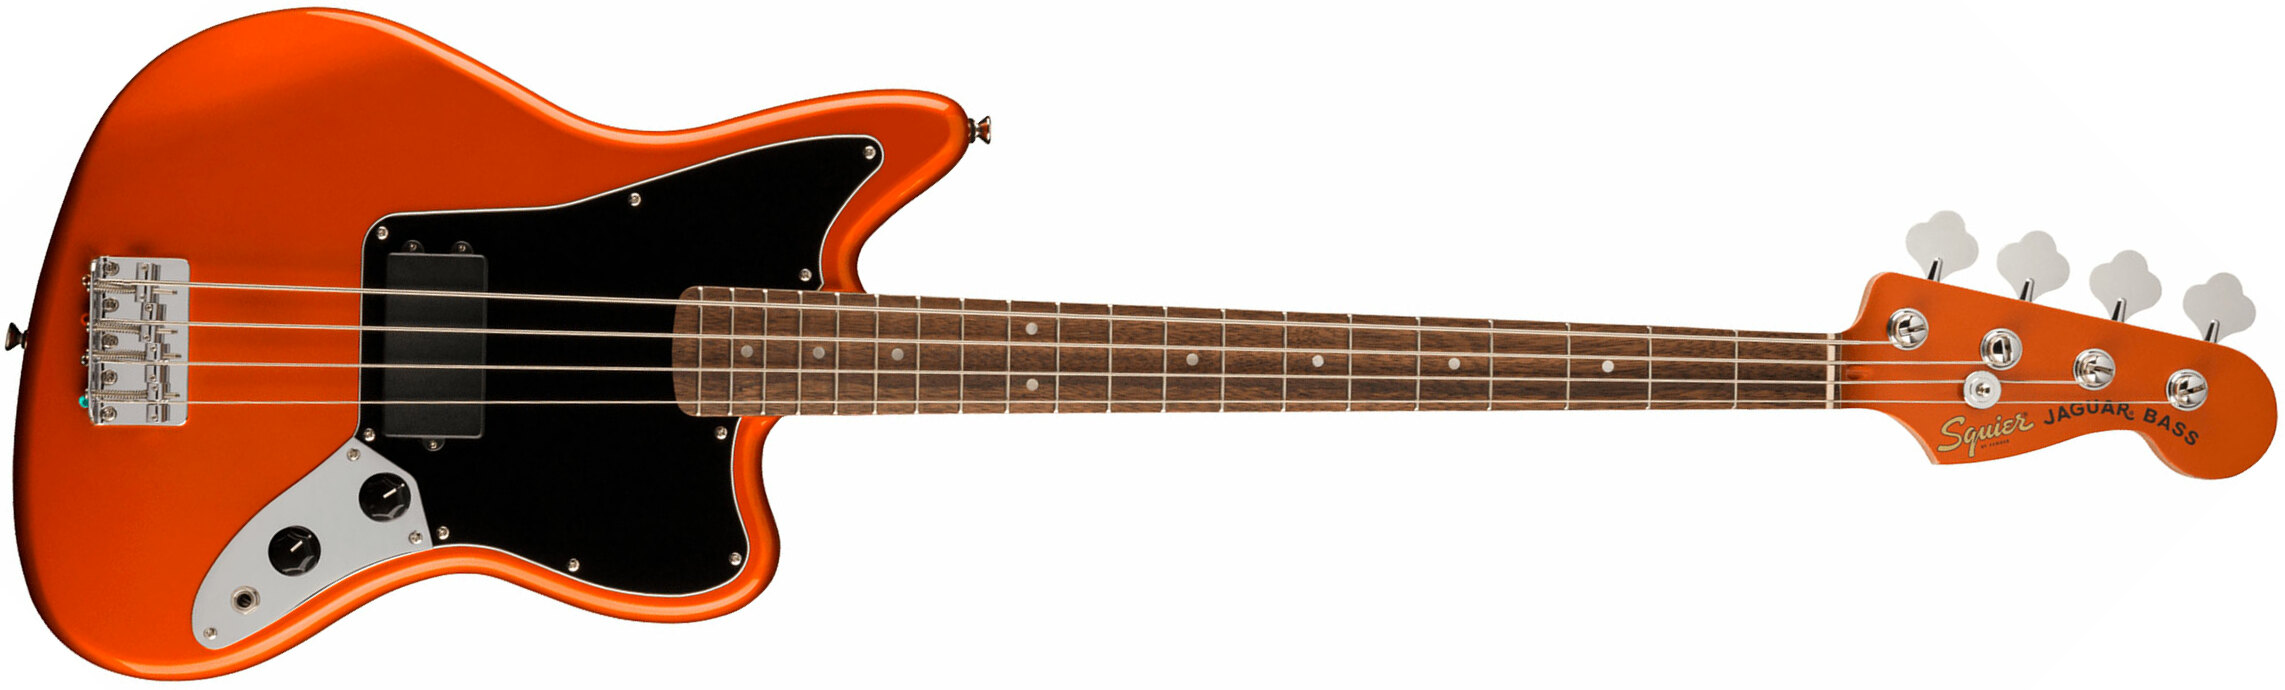 Squier Jaguar Bass H Affinity Fsr Lau - Metallic Orange - Solid body elektrische bas - Main picture